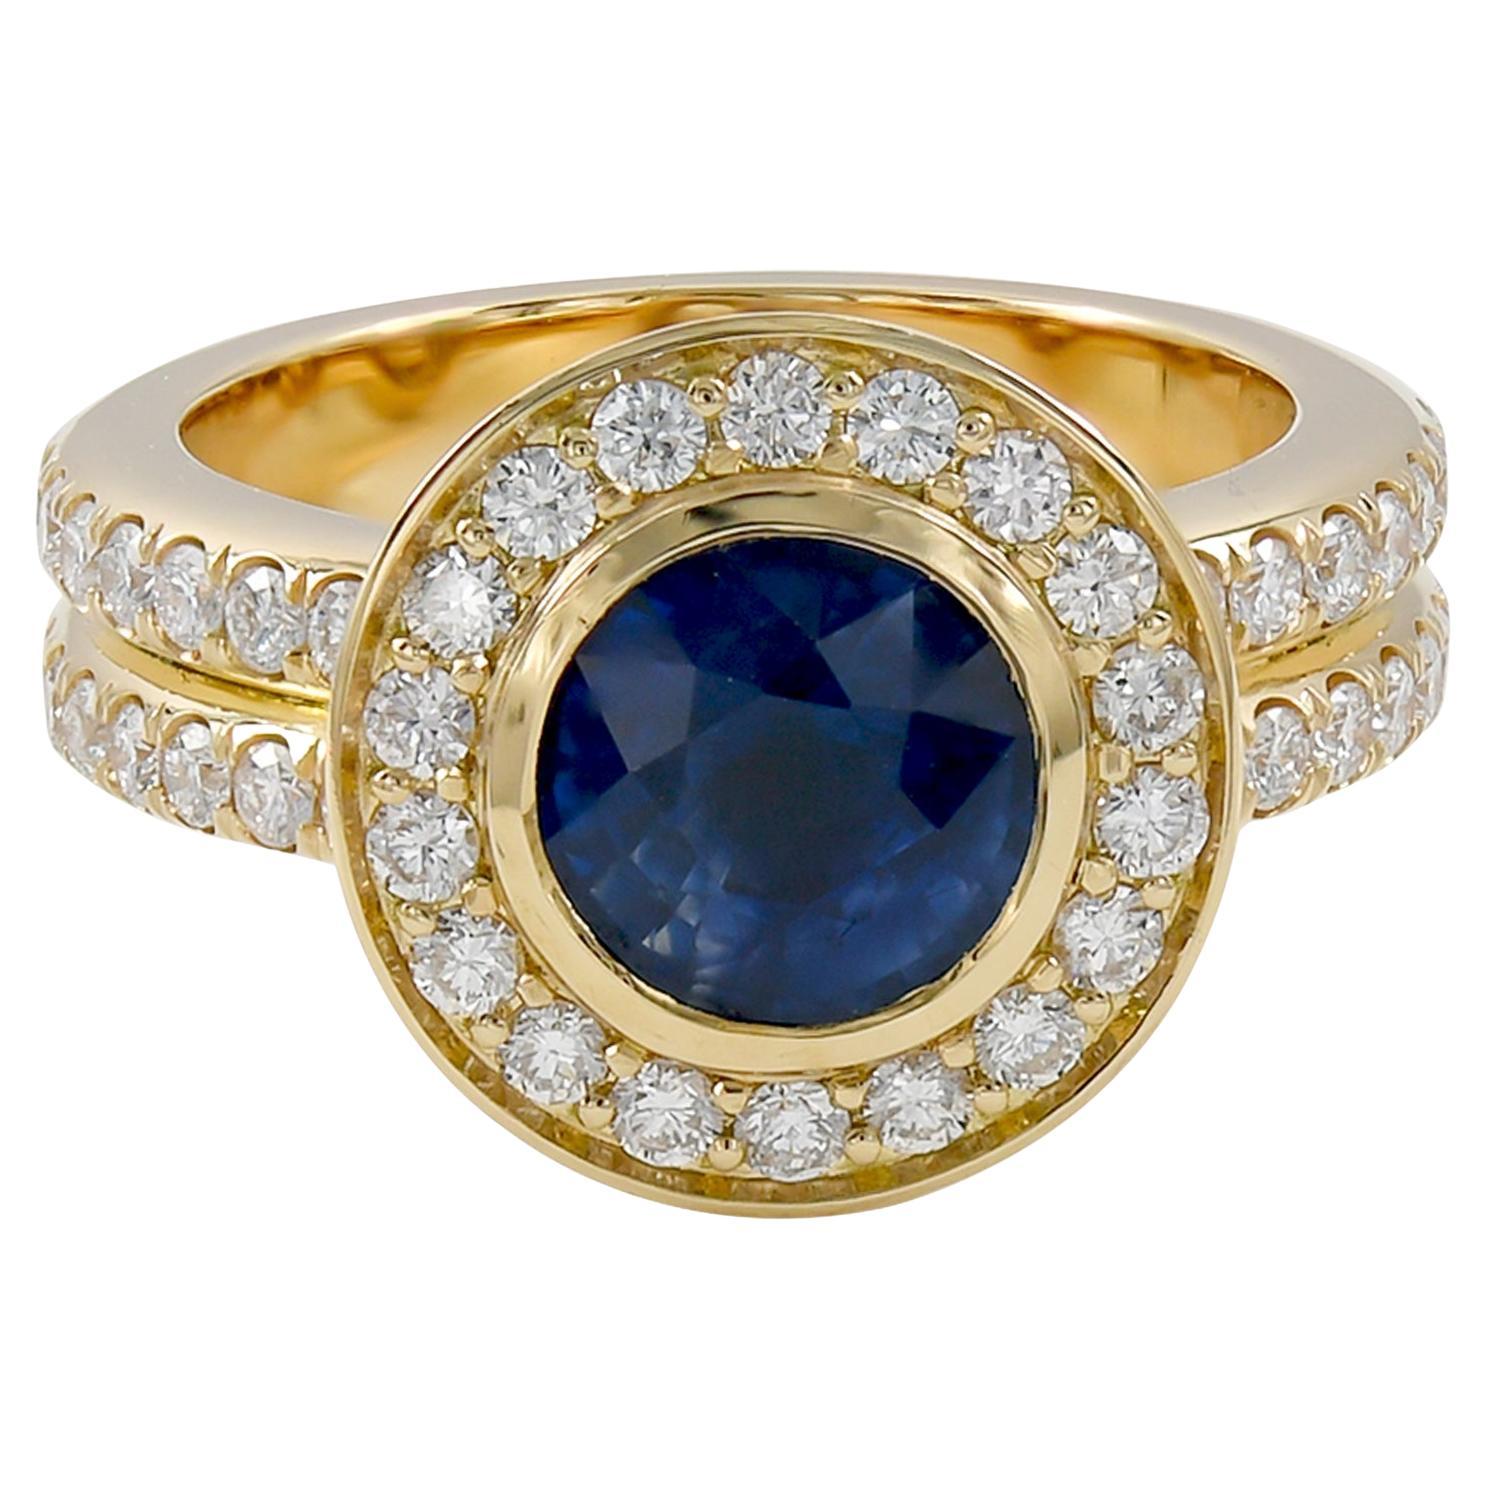 Spectra Fine Jewelry Blue Sapphire Diamond Cocktail Ring